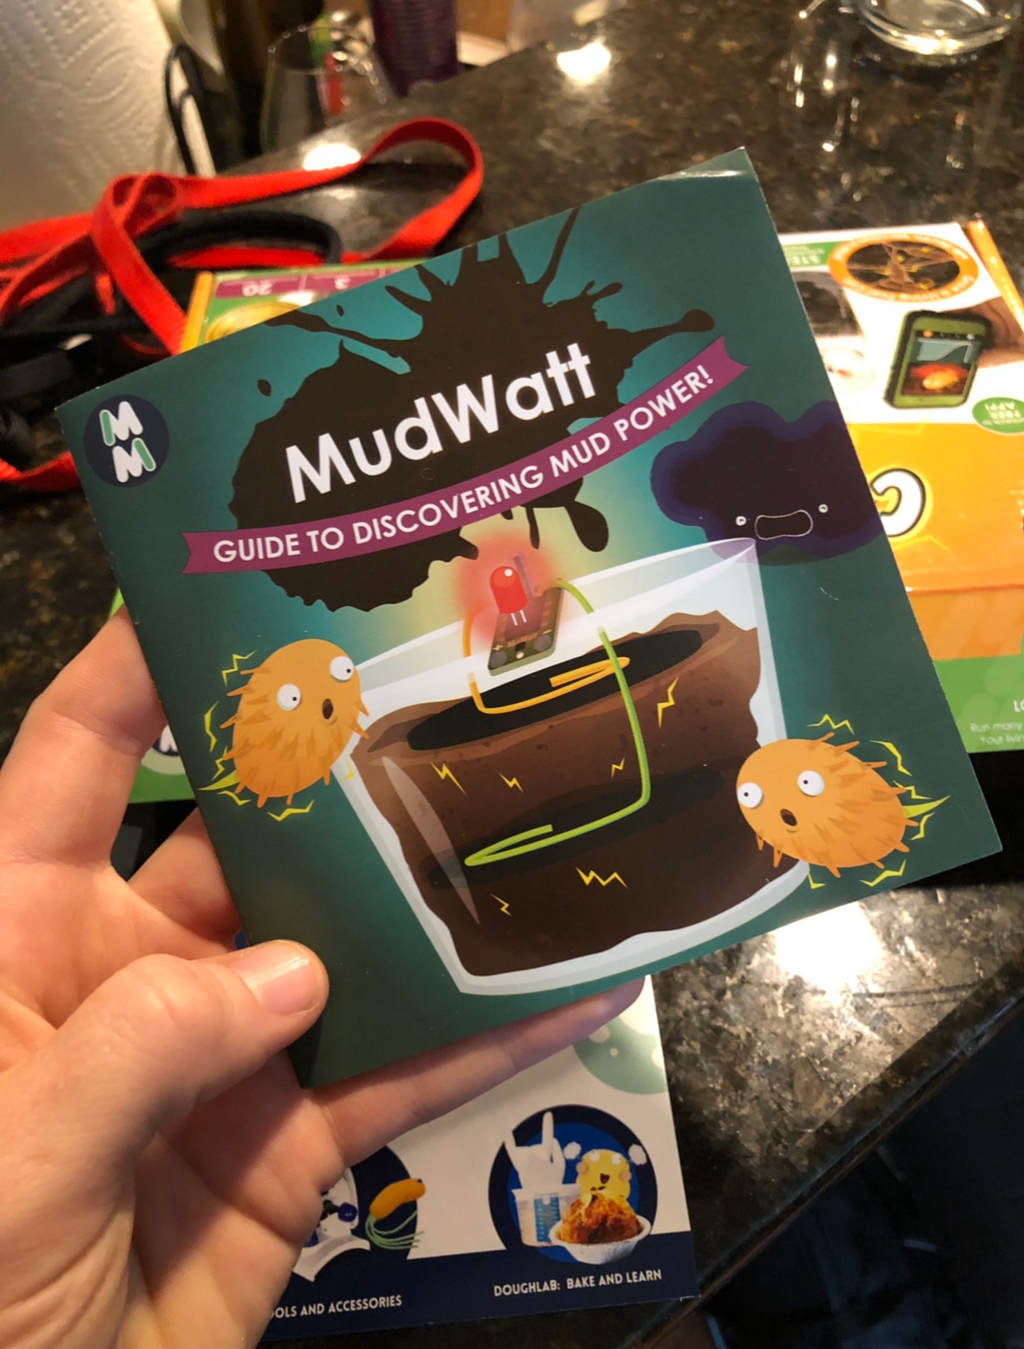 The Mudwatt microbial battery kit